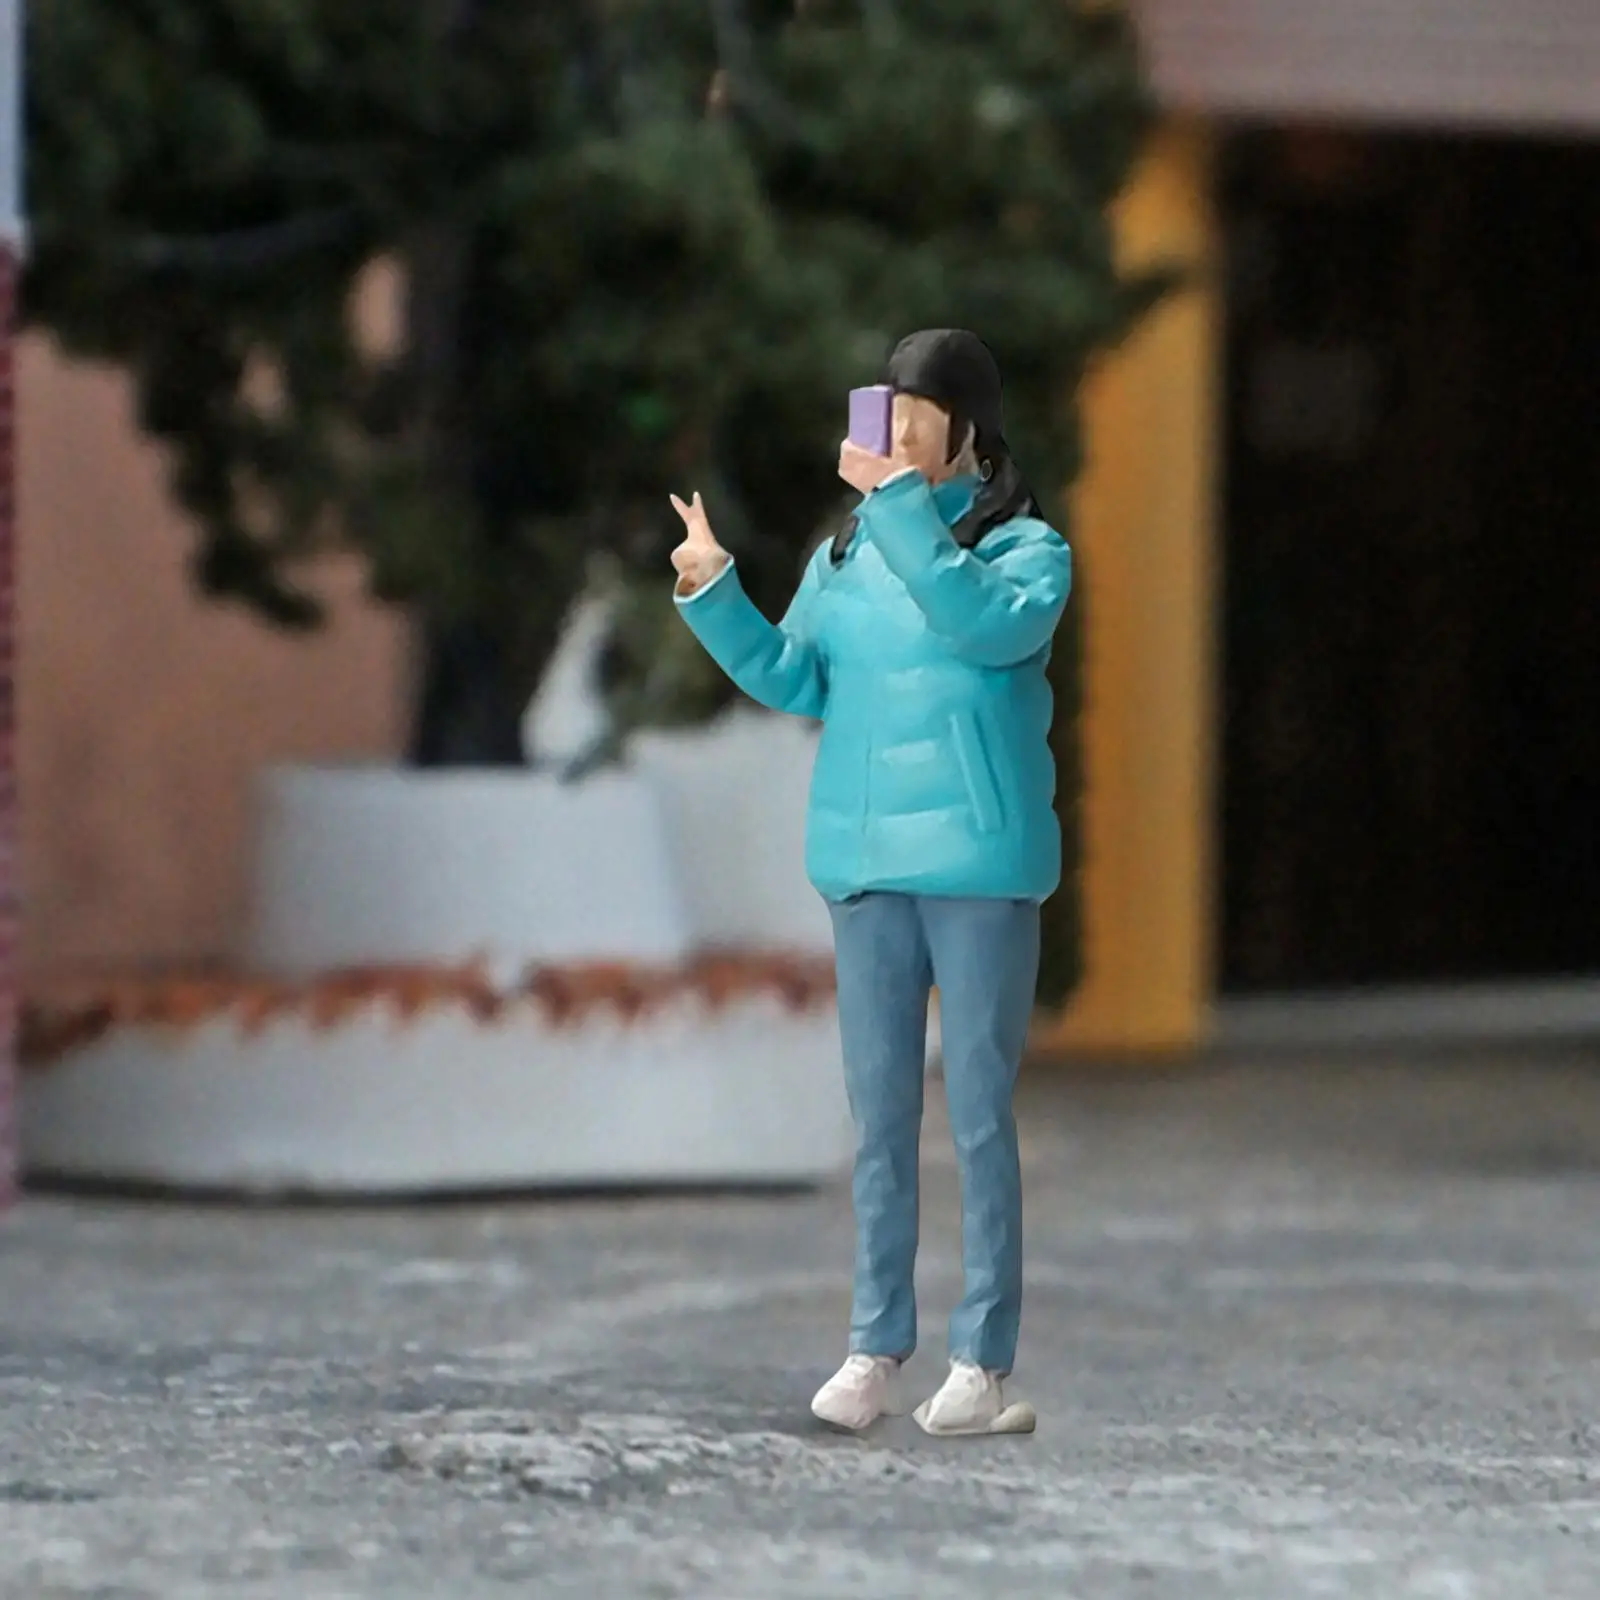 1/64 People Figures Miniature People Figurines Down Jacket Girl Hand Painted DIY Crafts for Miniature Scene Diorama Decor